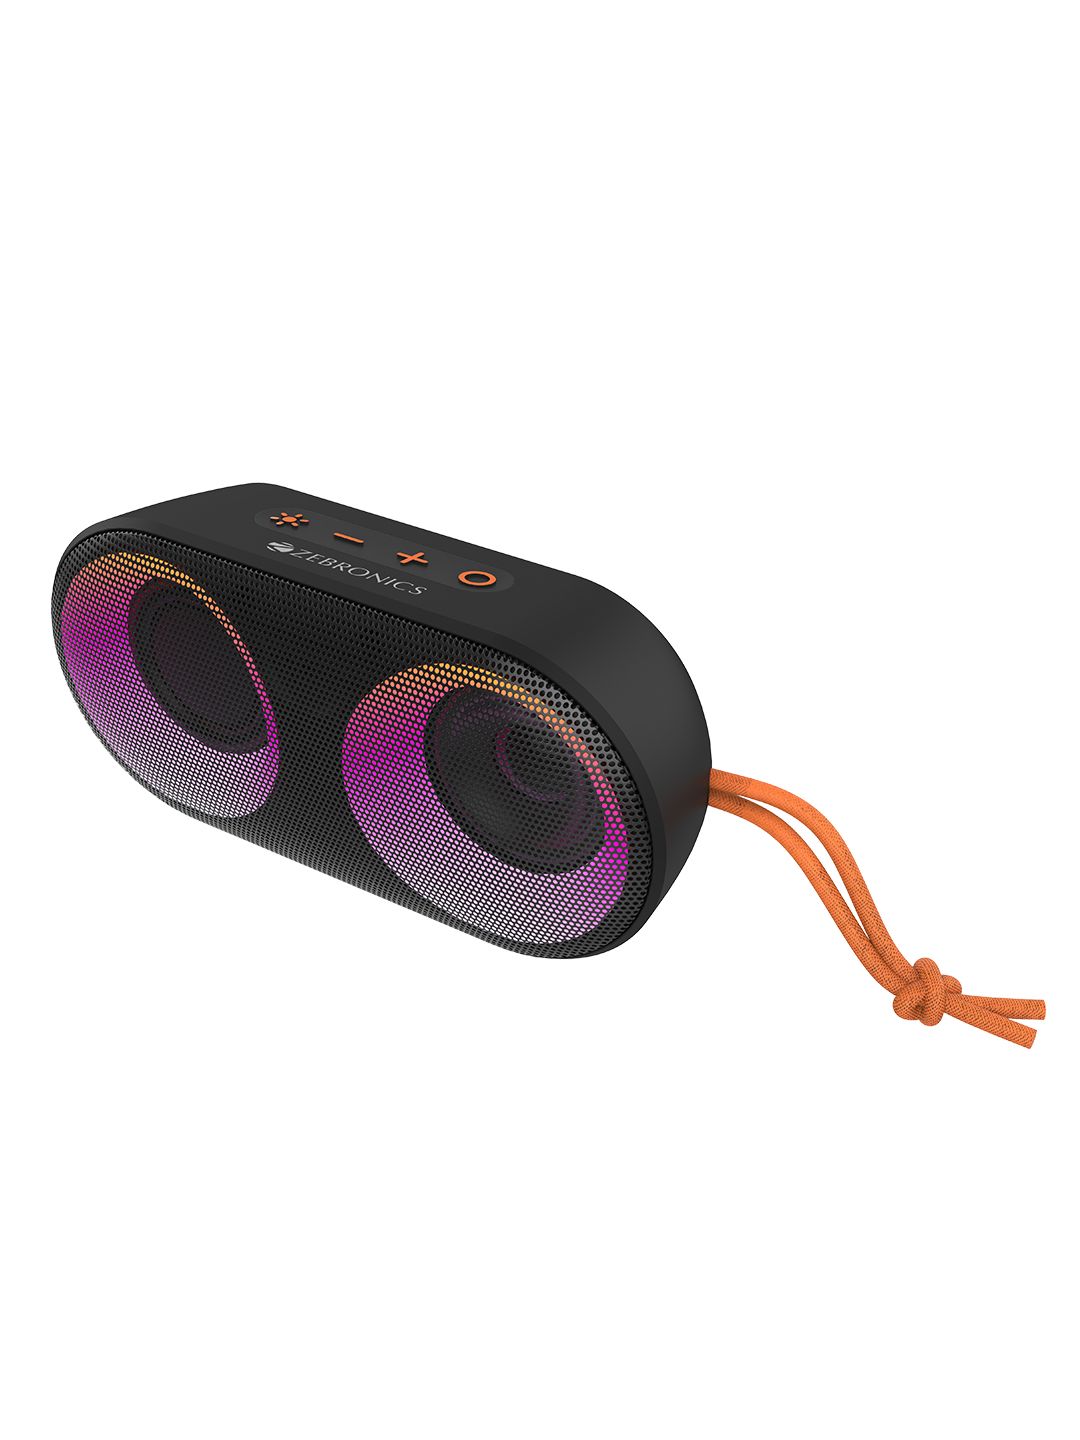 ZEBRONICS ZEB-MUSIC BOMB X MINI Bluetooth 5.0 speaker with IPX5 Waterproof - Black Price in India